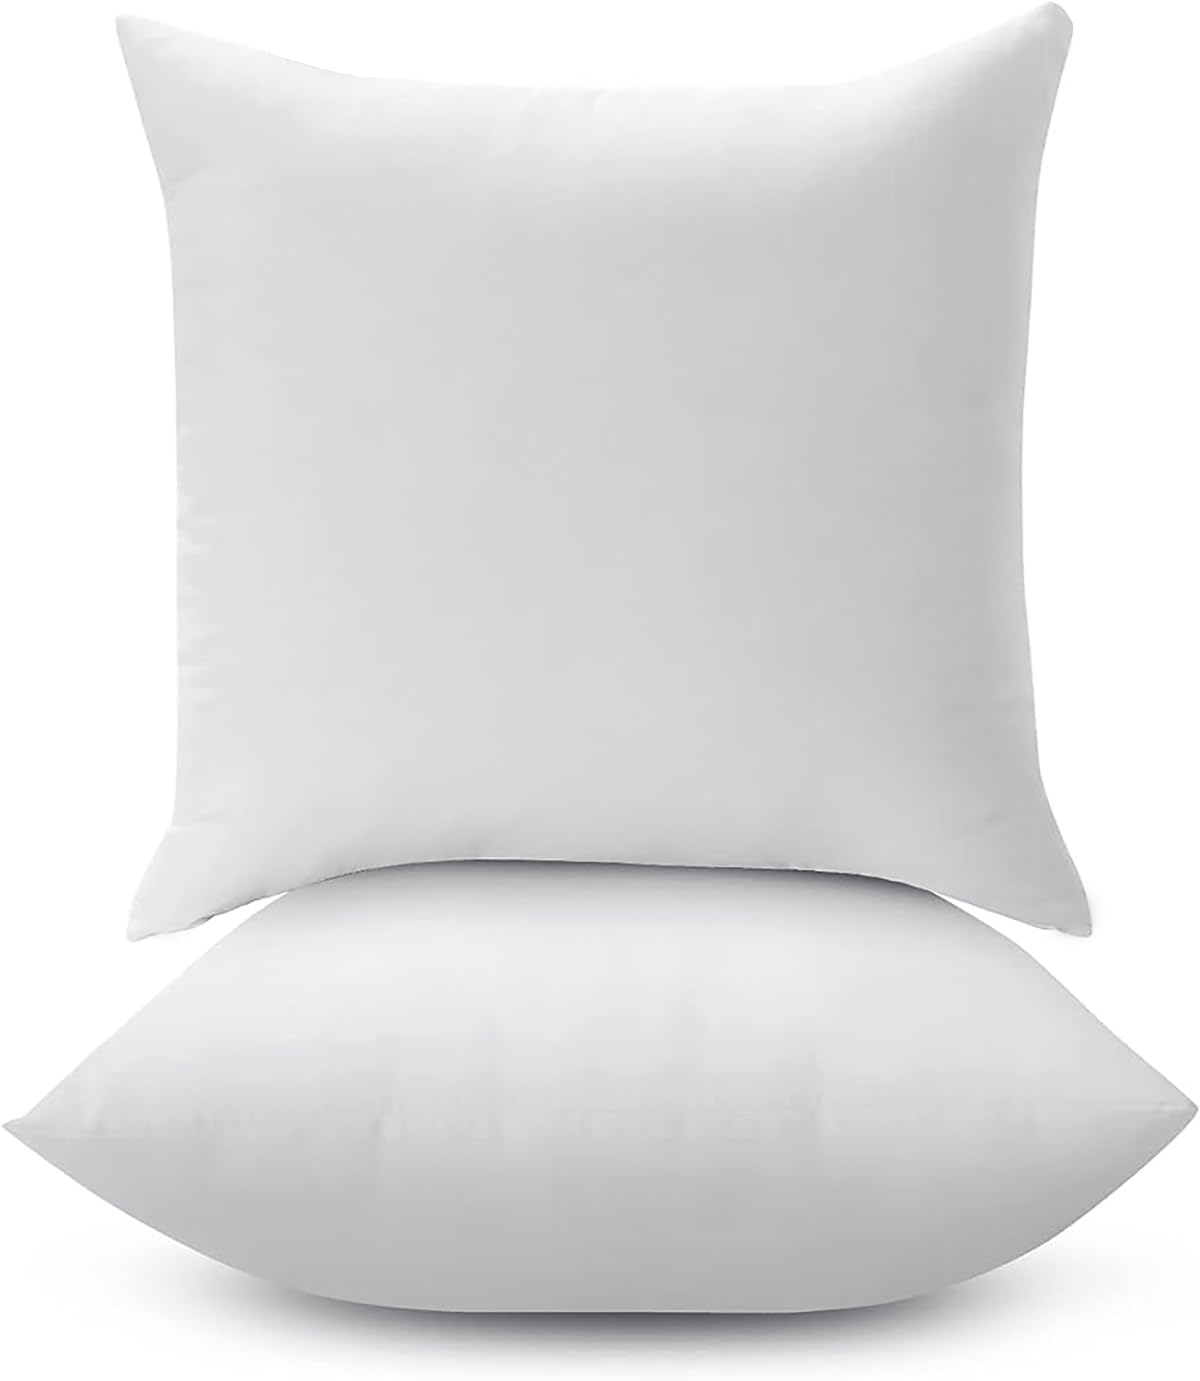  LANE LINEN 4 Pack 18x18 White Throw Pillow Inserts for